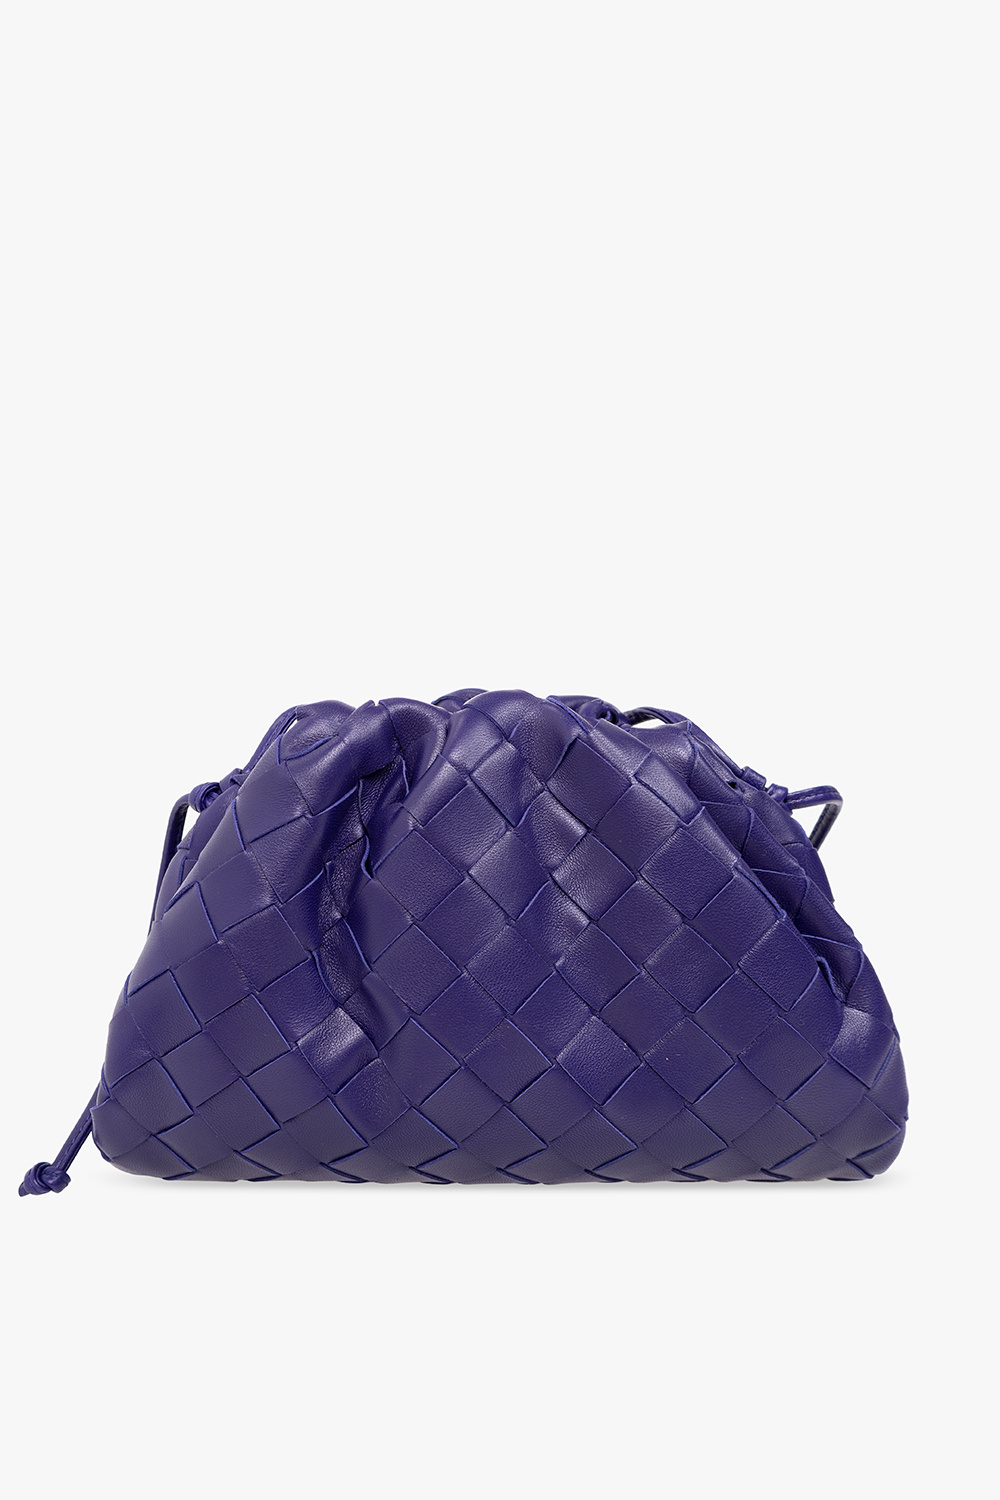 Midnight'' purple mini clutch for Women